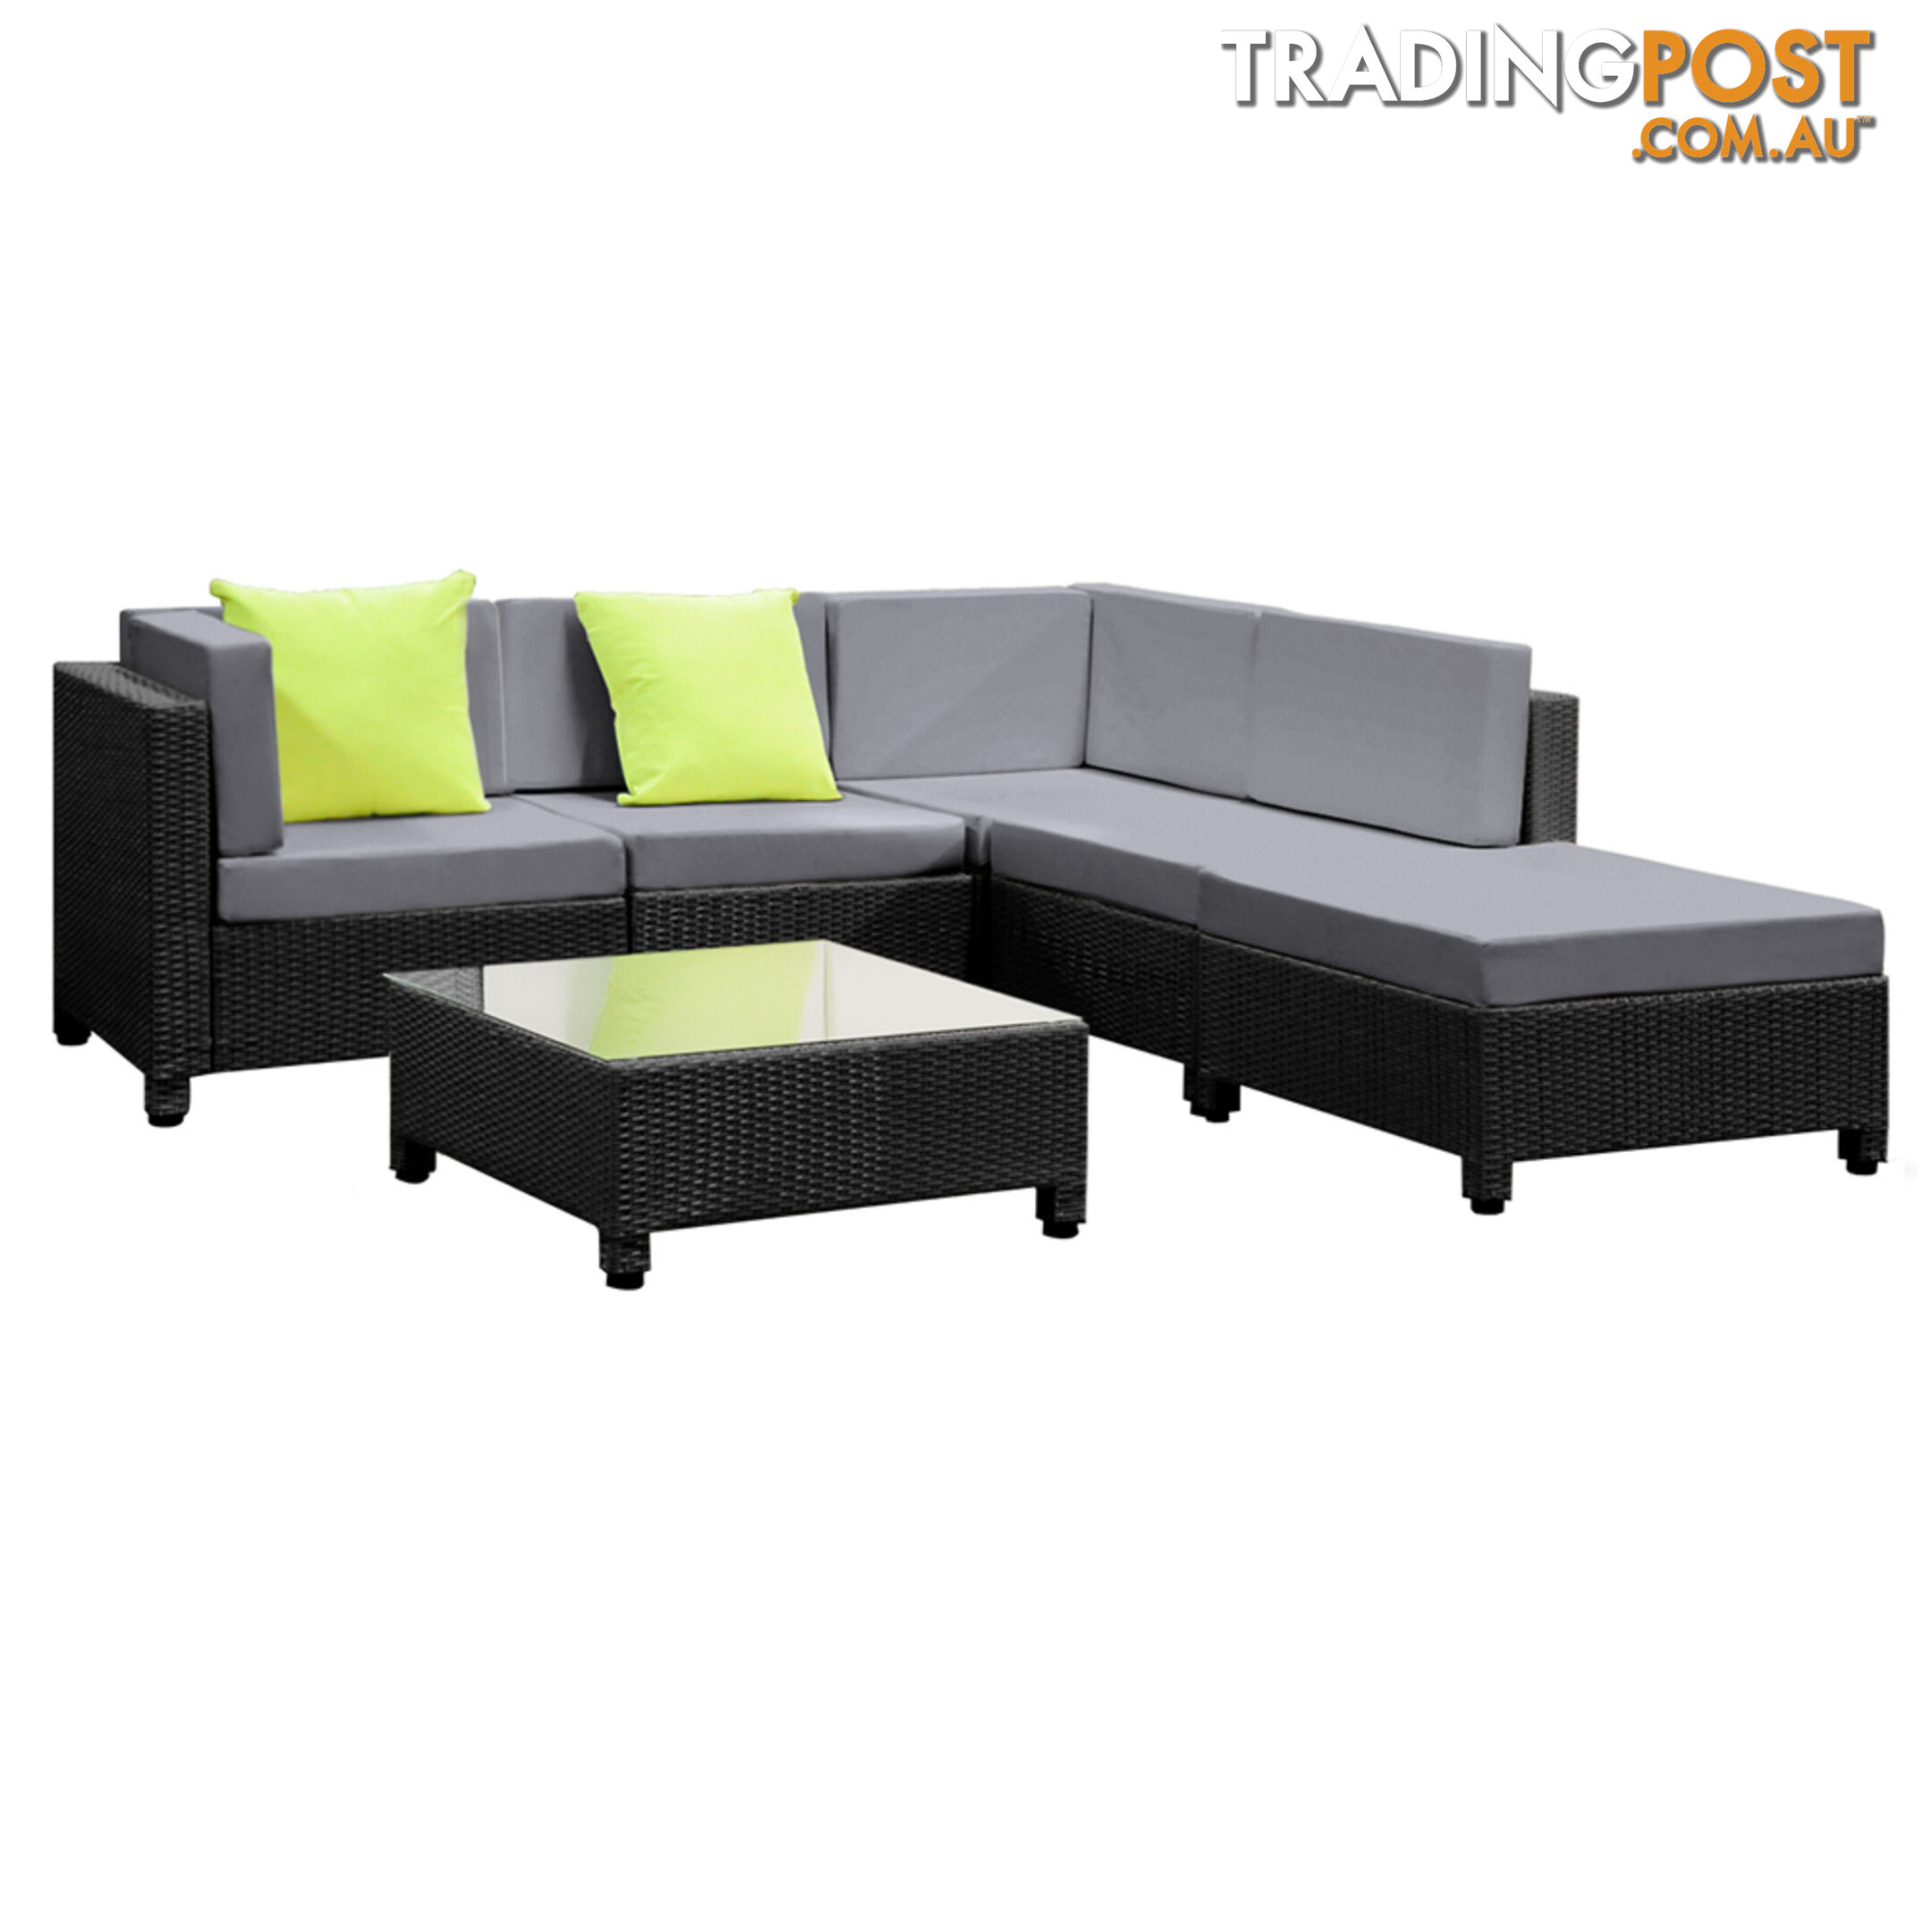 Outdoor Lounge 5 Seater Garden Furniture Wicker 6pcs Rattan Sofa Setting BKGR